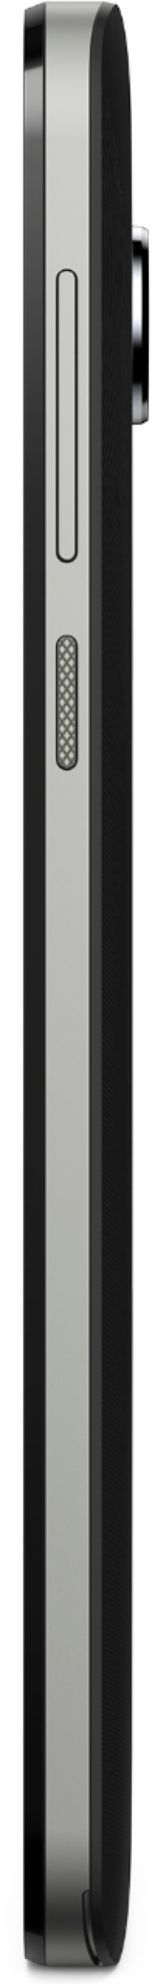 Lively™ Dual-Layer Hard Shell Case for Jitterbug Smart3 Black LV-SMRTDLBK -  Best Buy